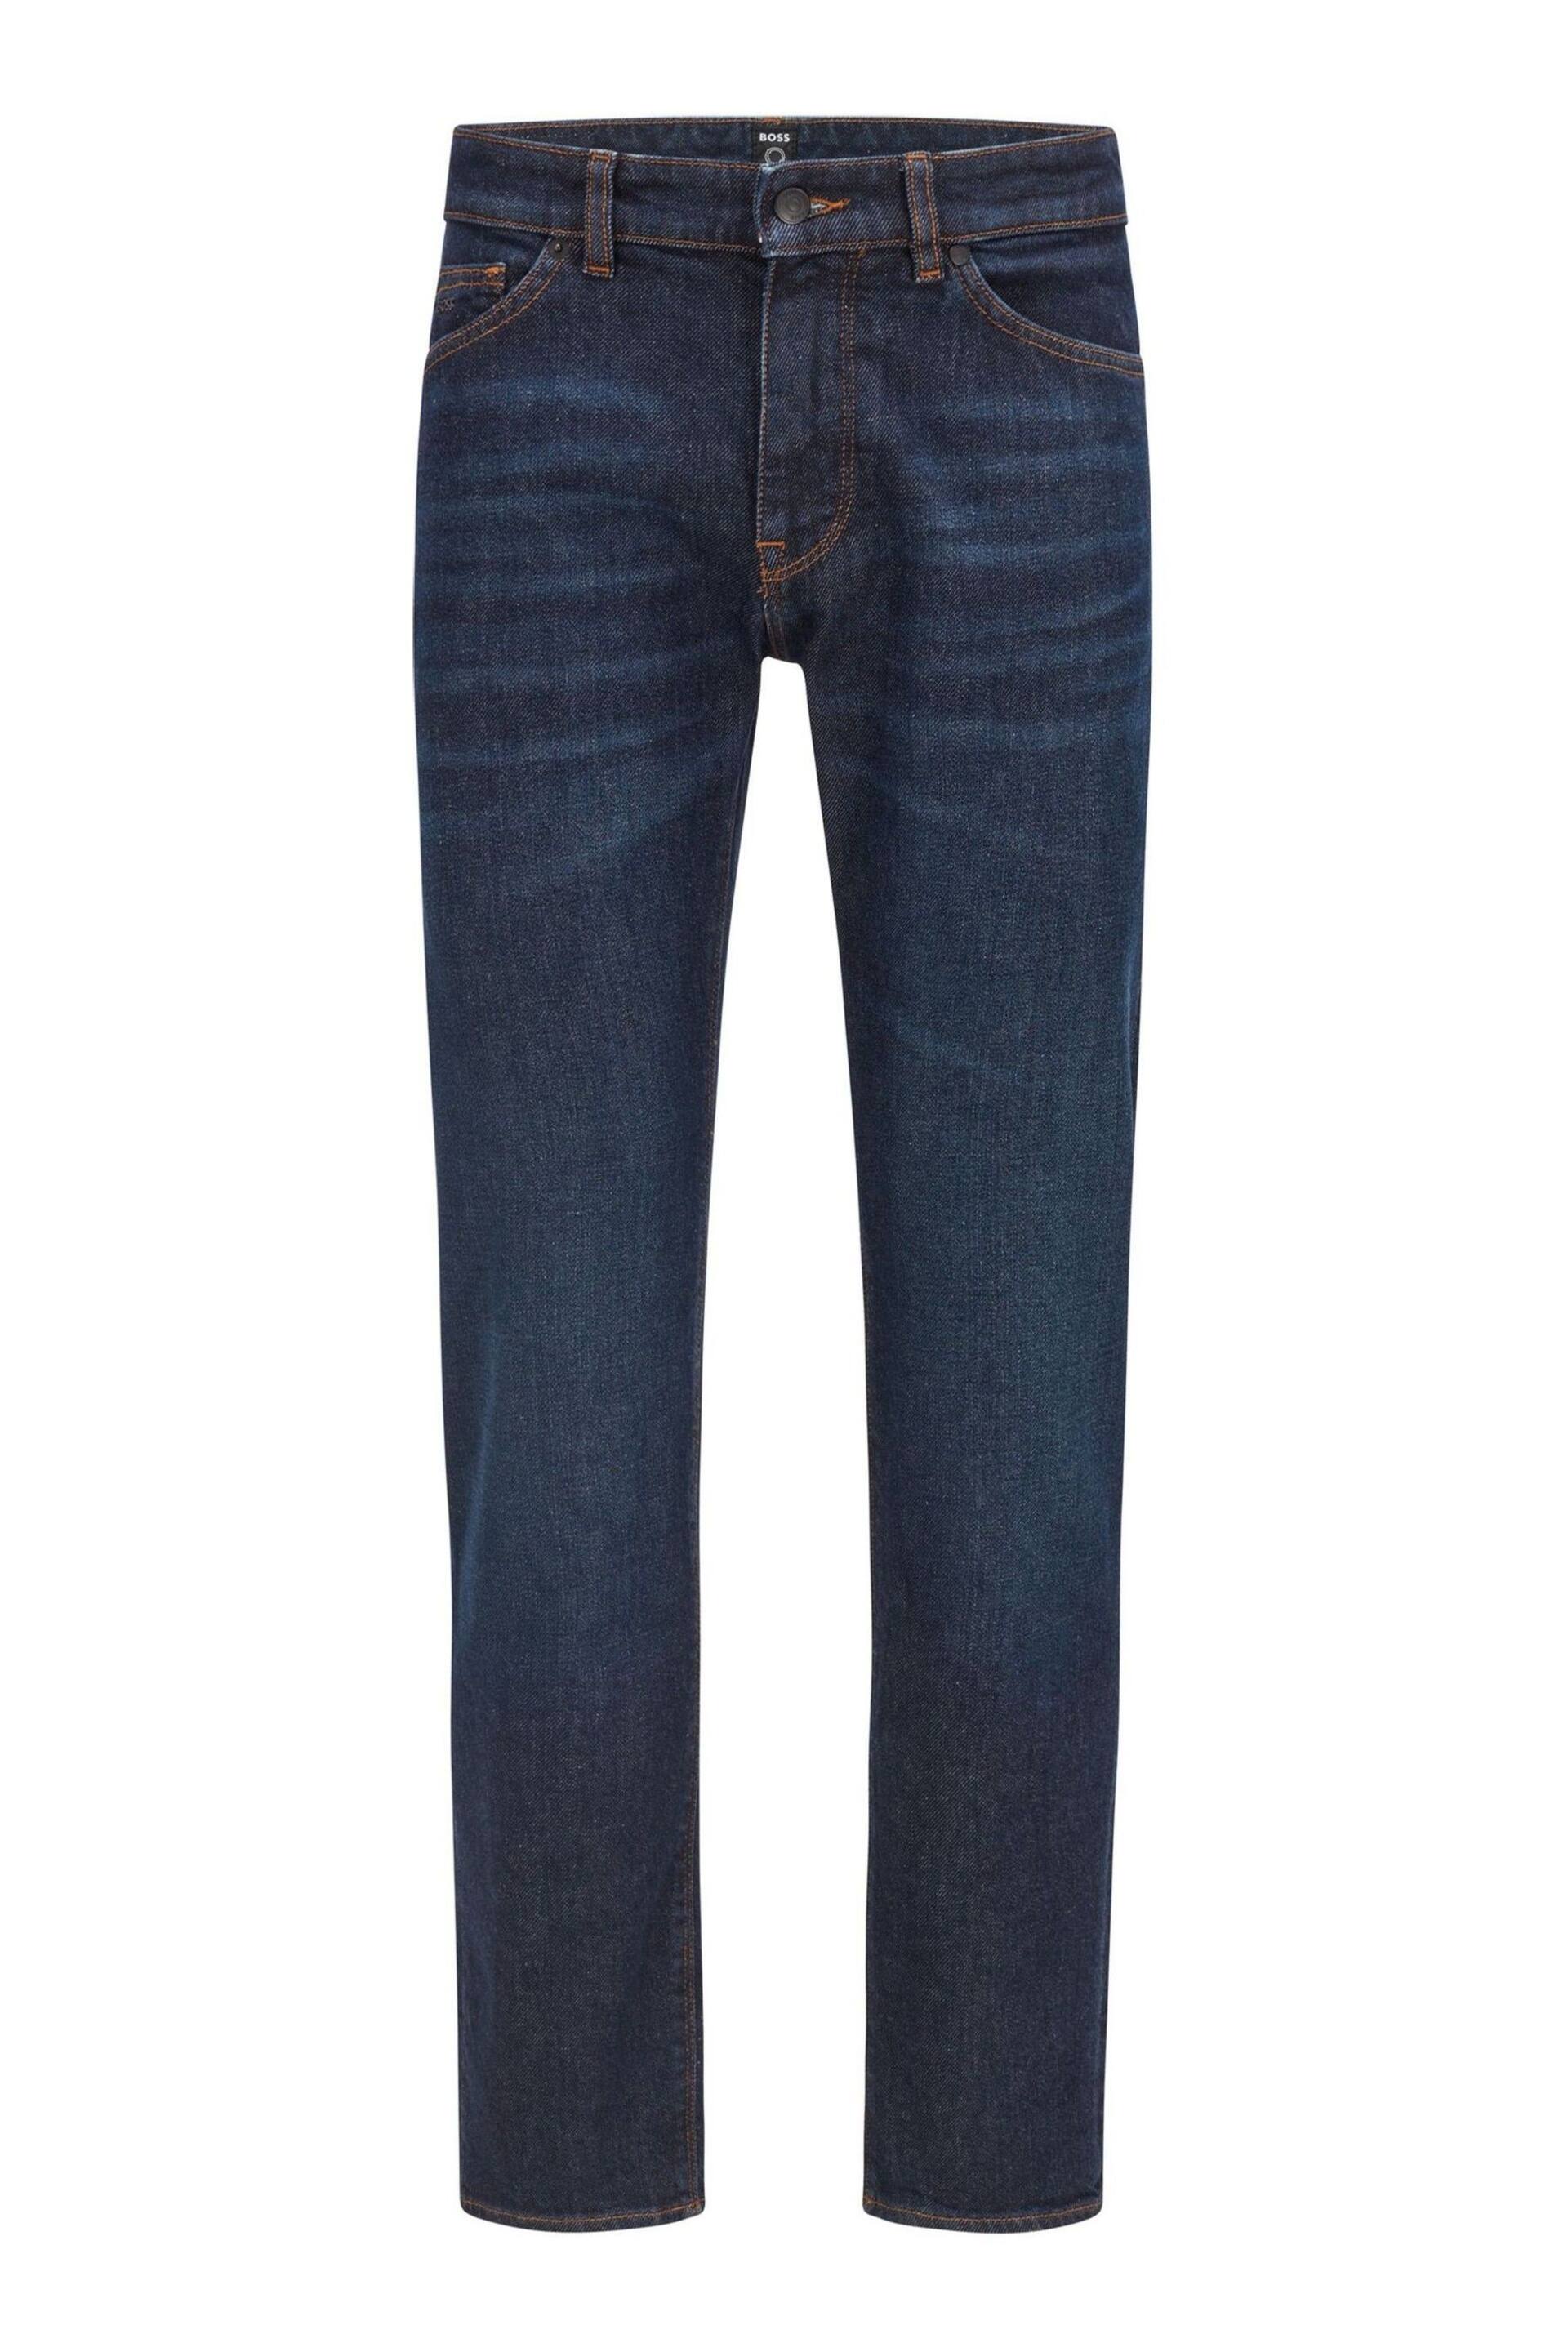 BOSS Dark Indigo Wash Maine Straight Fit Stretch Denim Jeans - Image 4 of 4